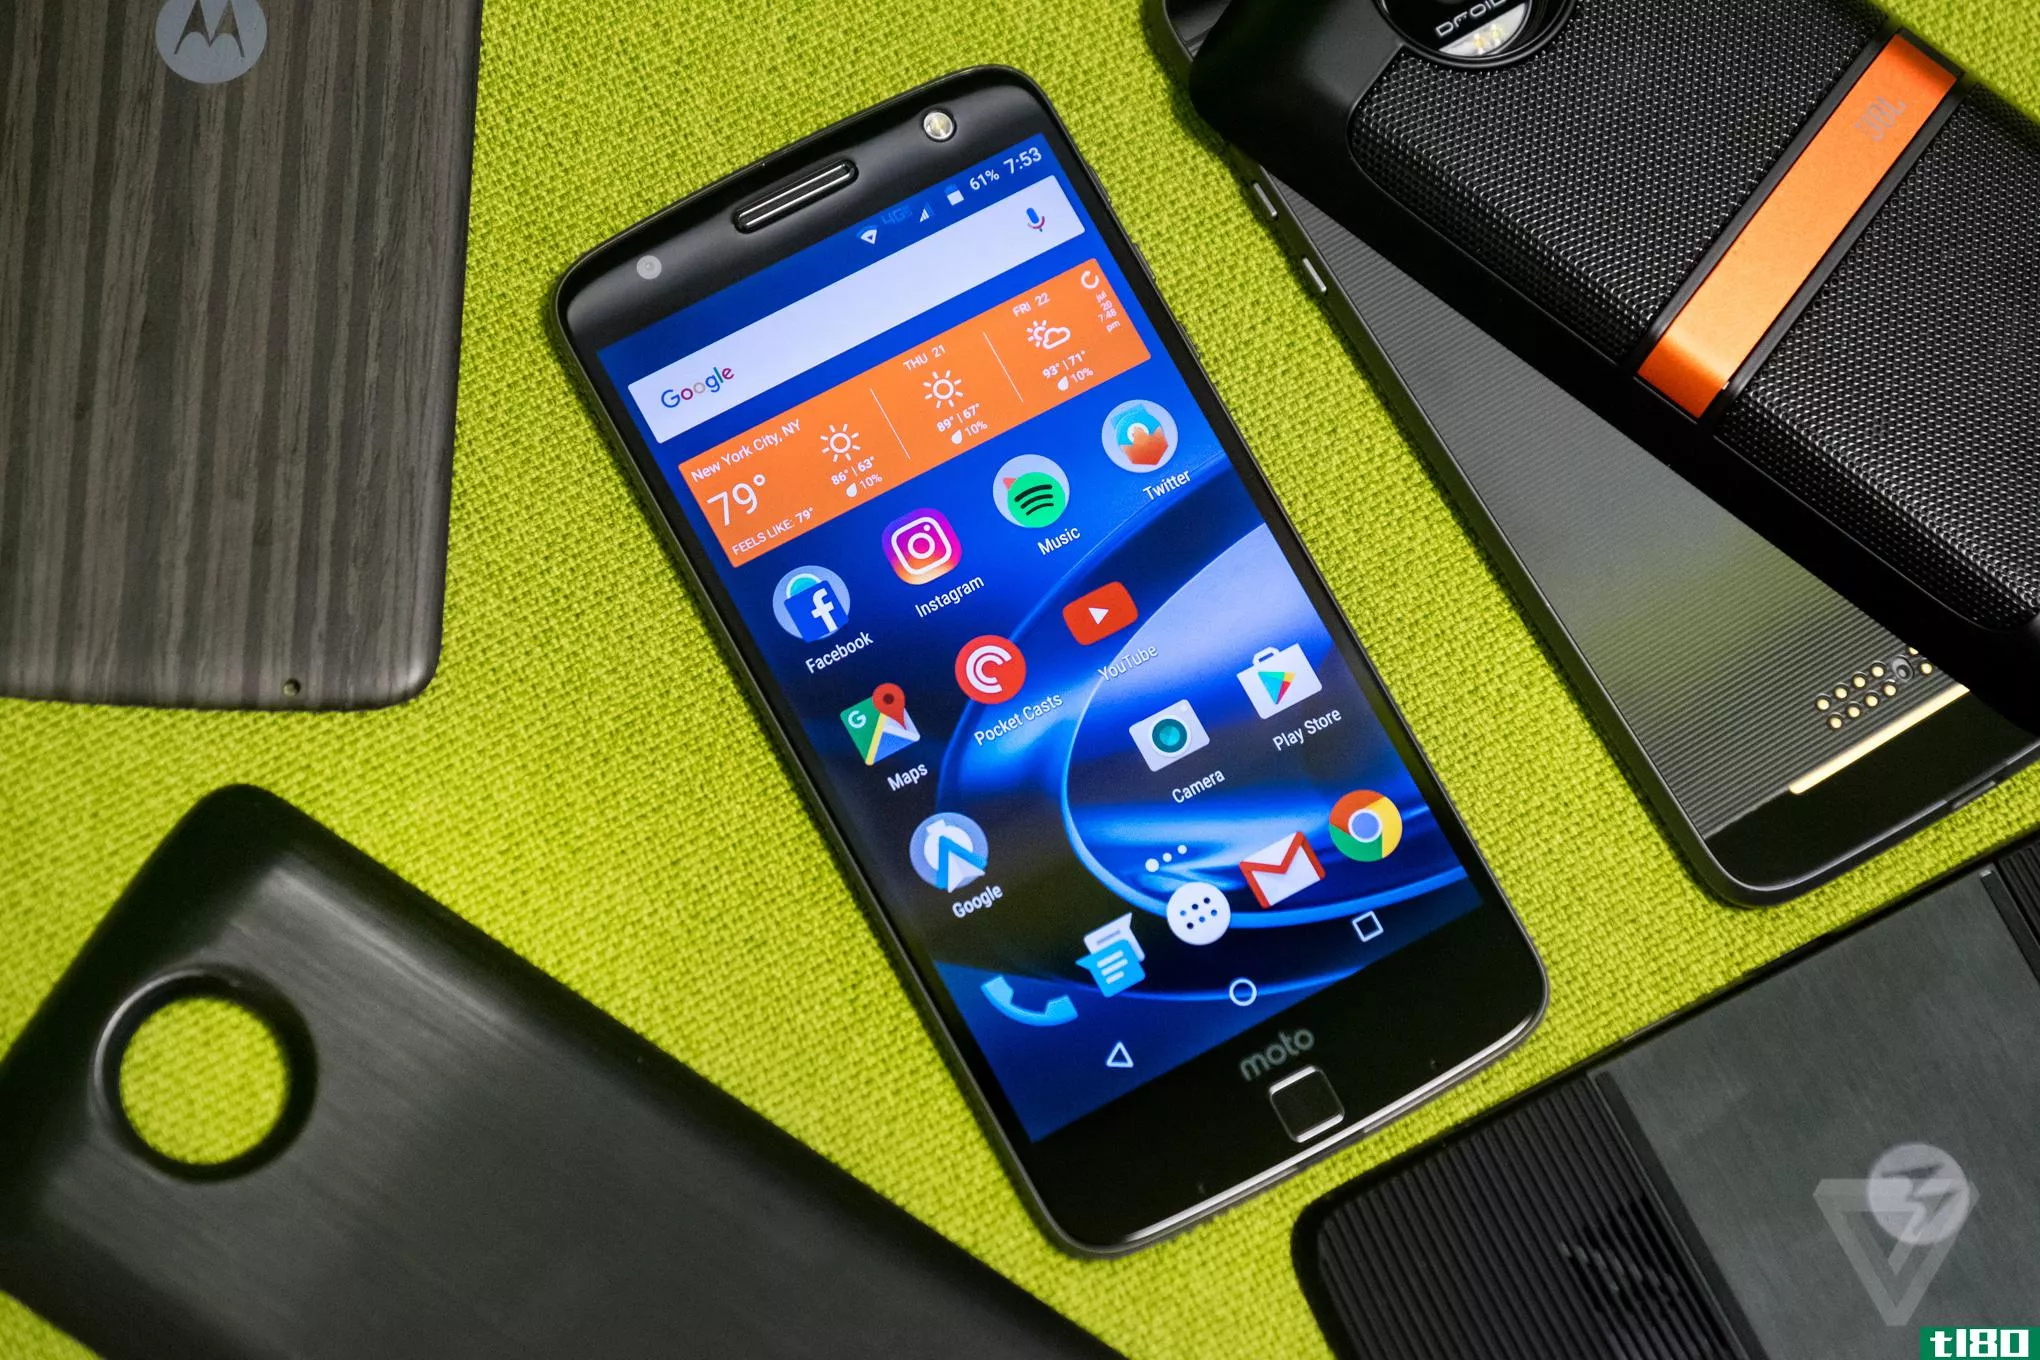 15款摩托罗拉手机将更新为android 7.0 nougat